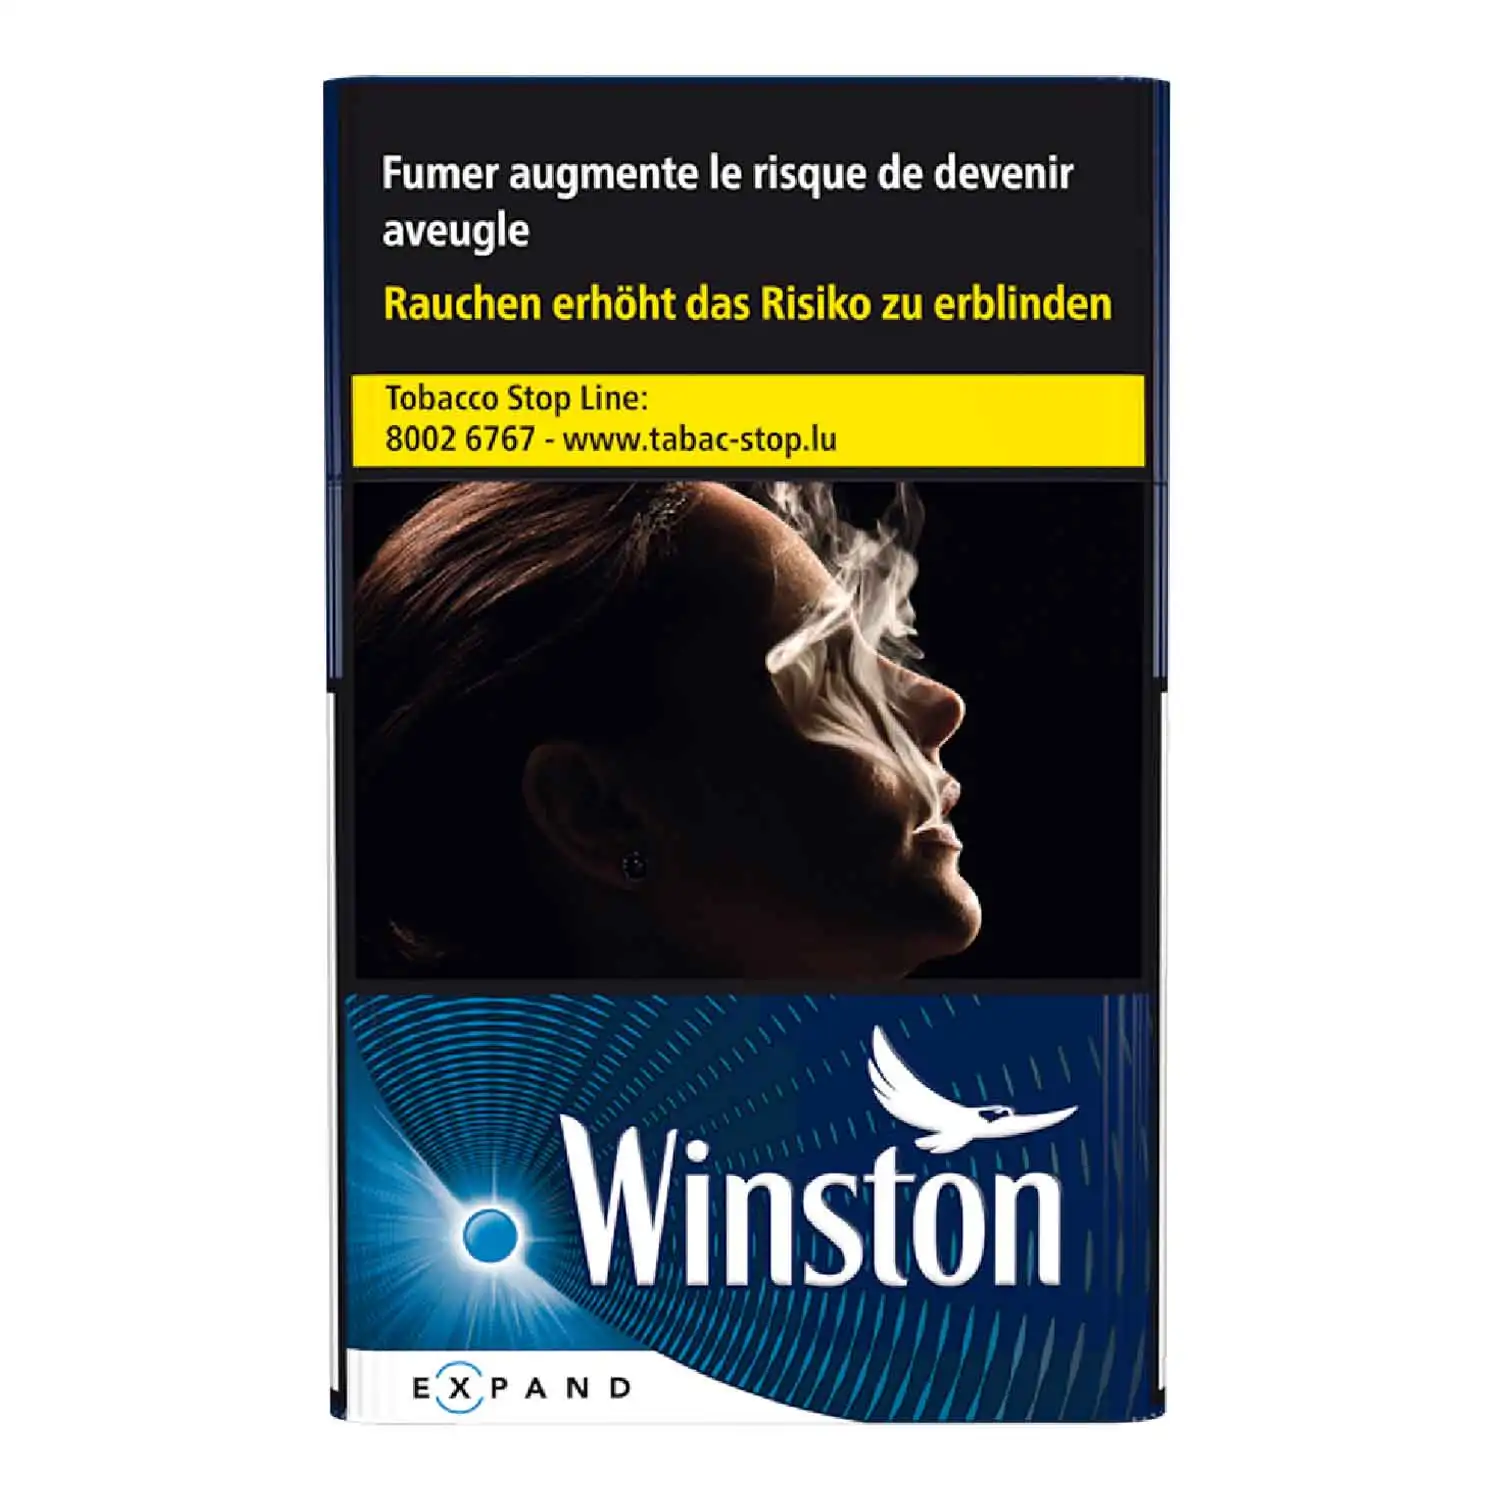 Winston expand 20 - Buy at Real Tobacco